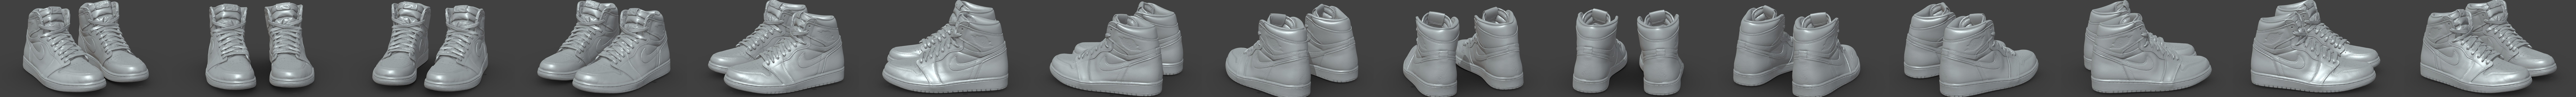 Nike Air Jordan 1 high x Louis vuitton - Buy Royalty Free 3D model